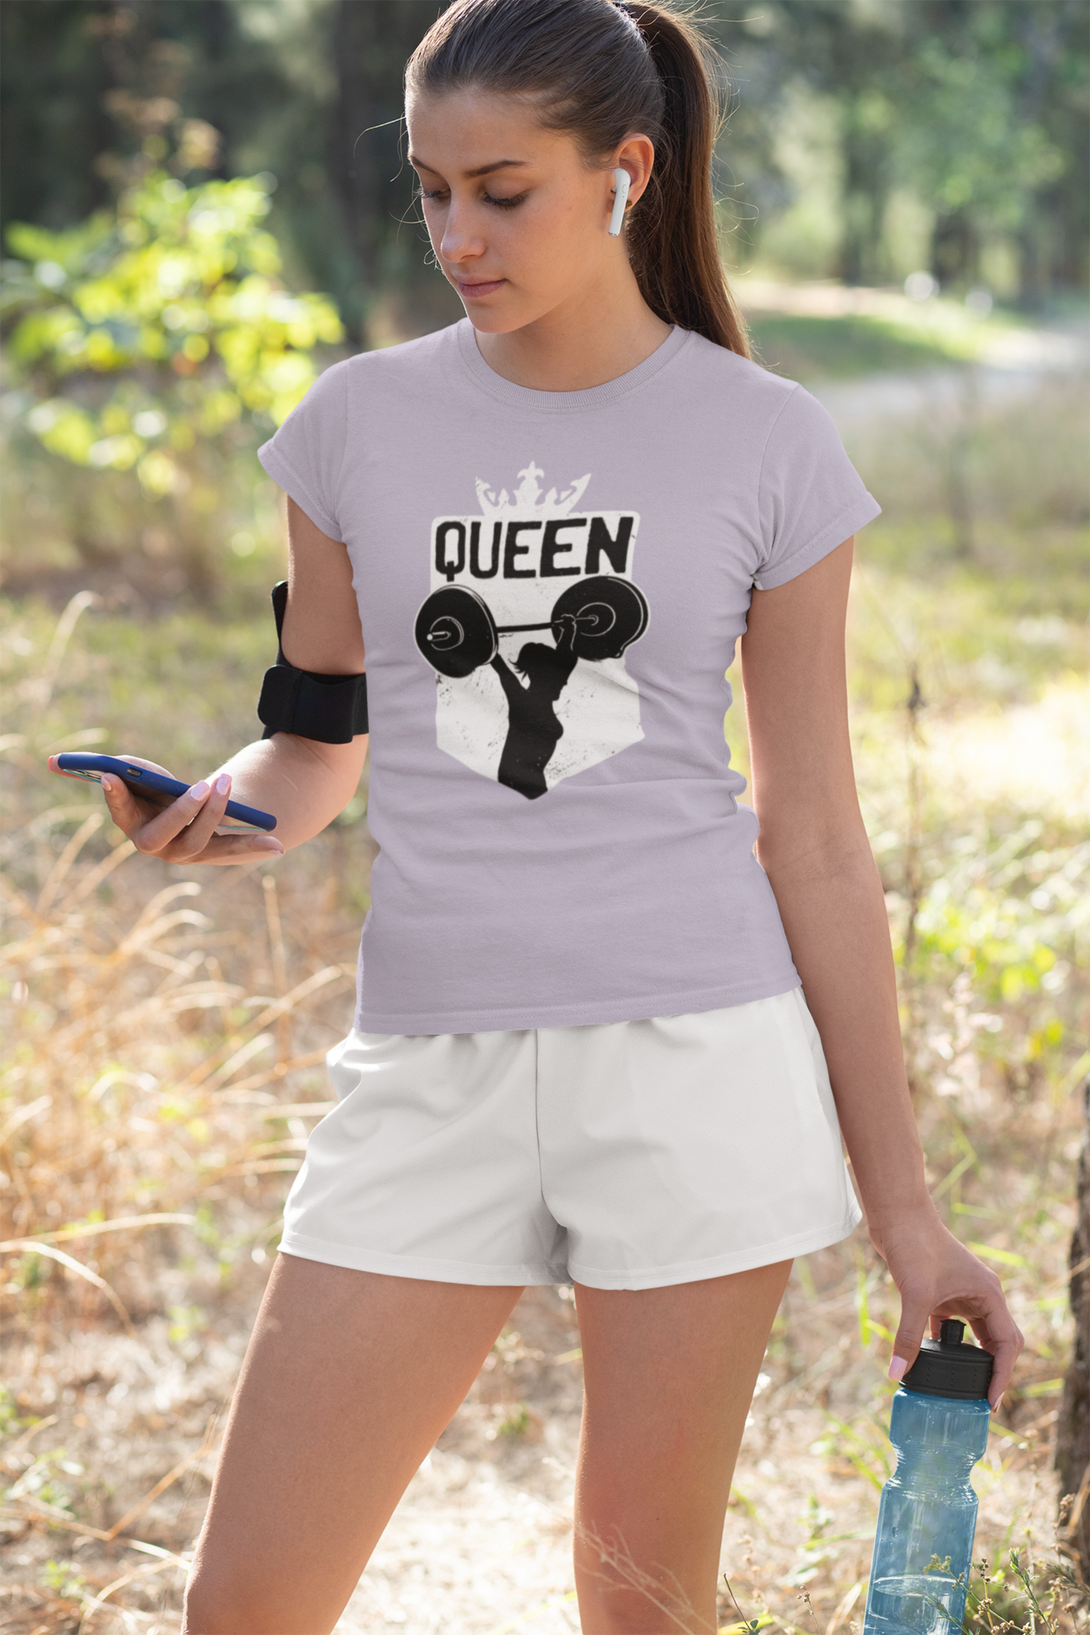 Queen Printed T-Shirt For Women - WowWaves - 5